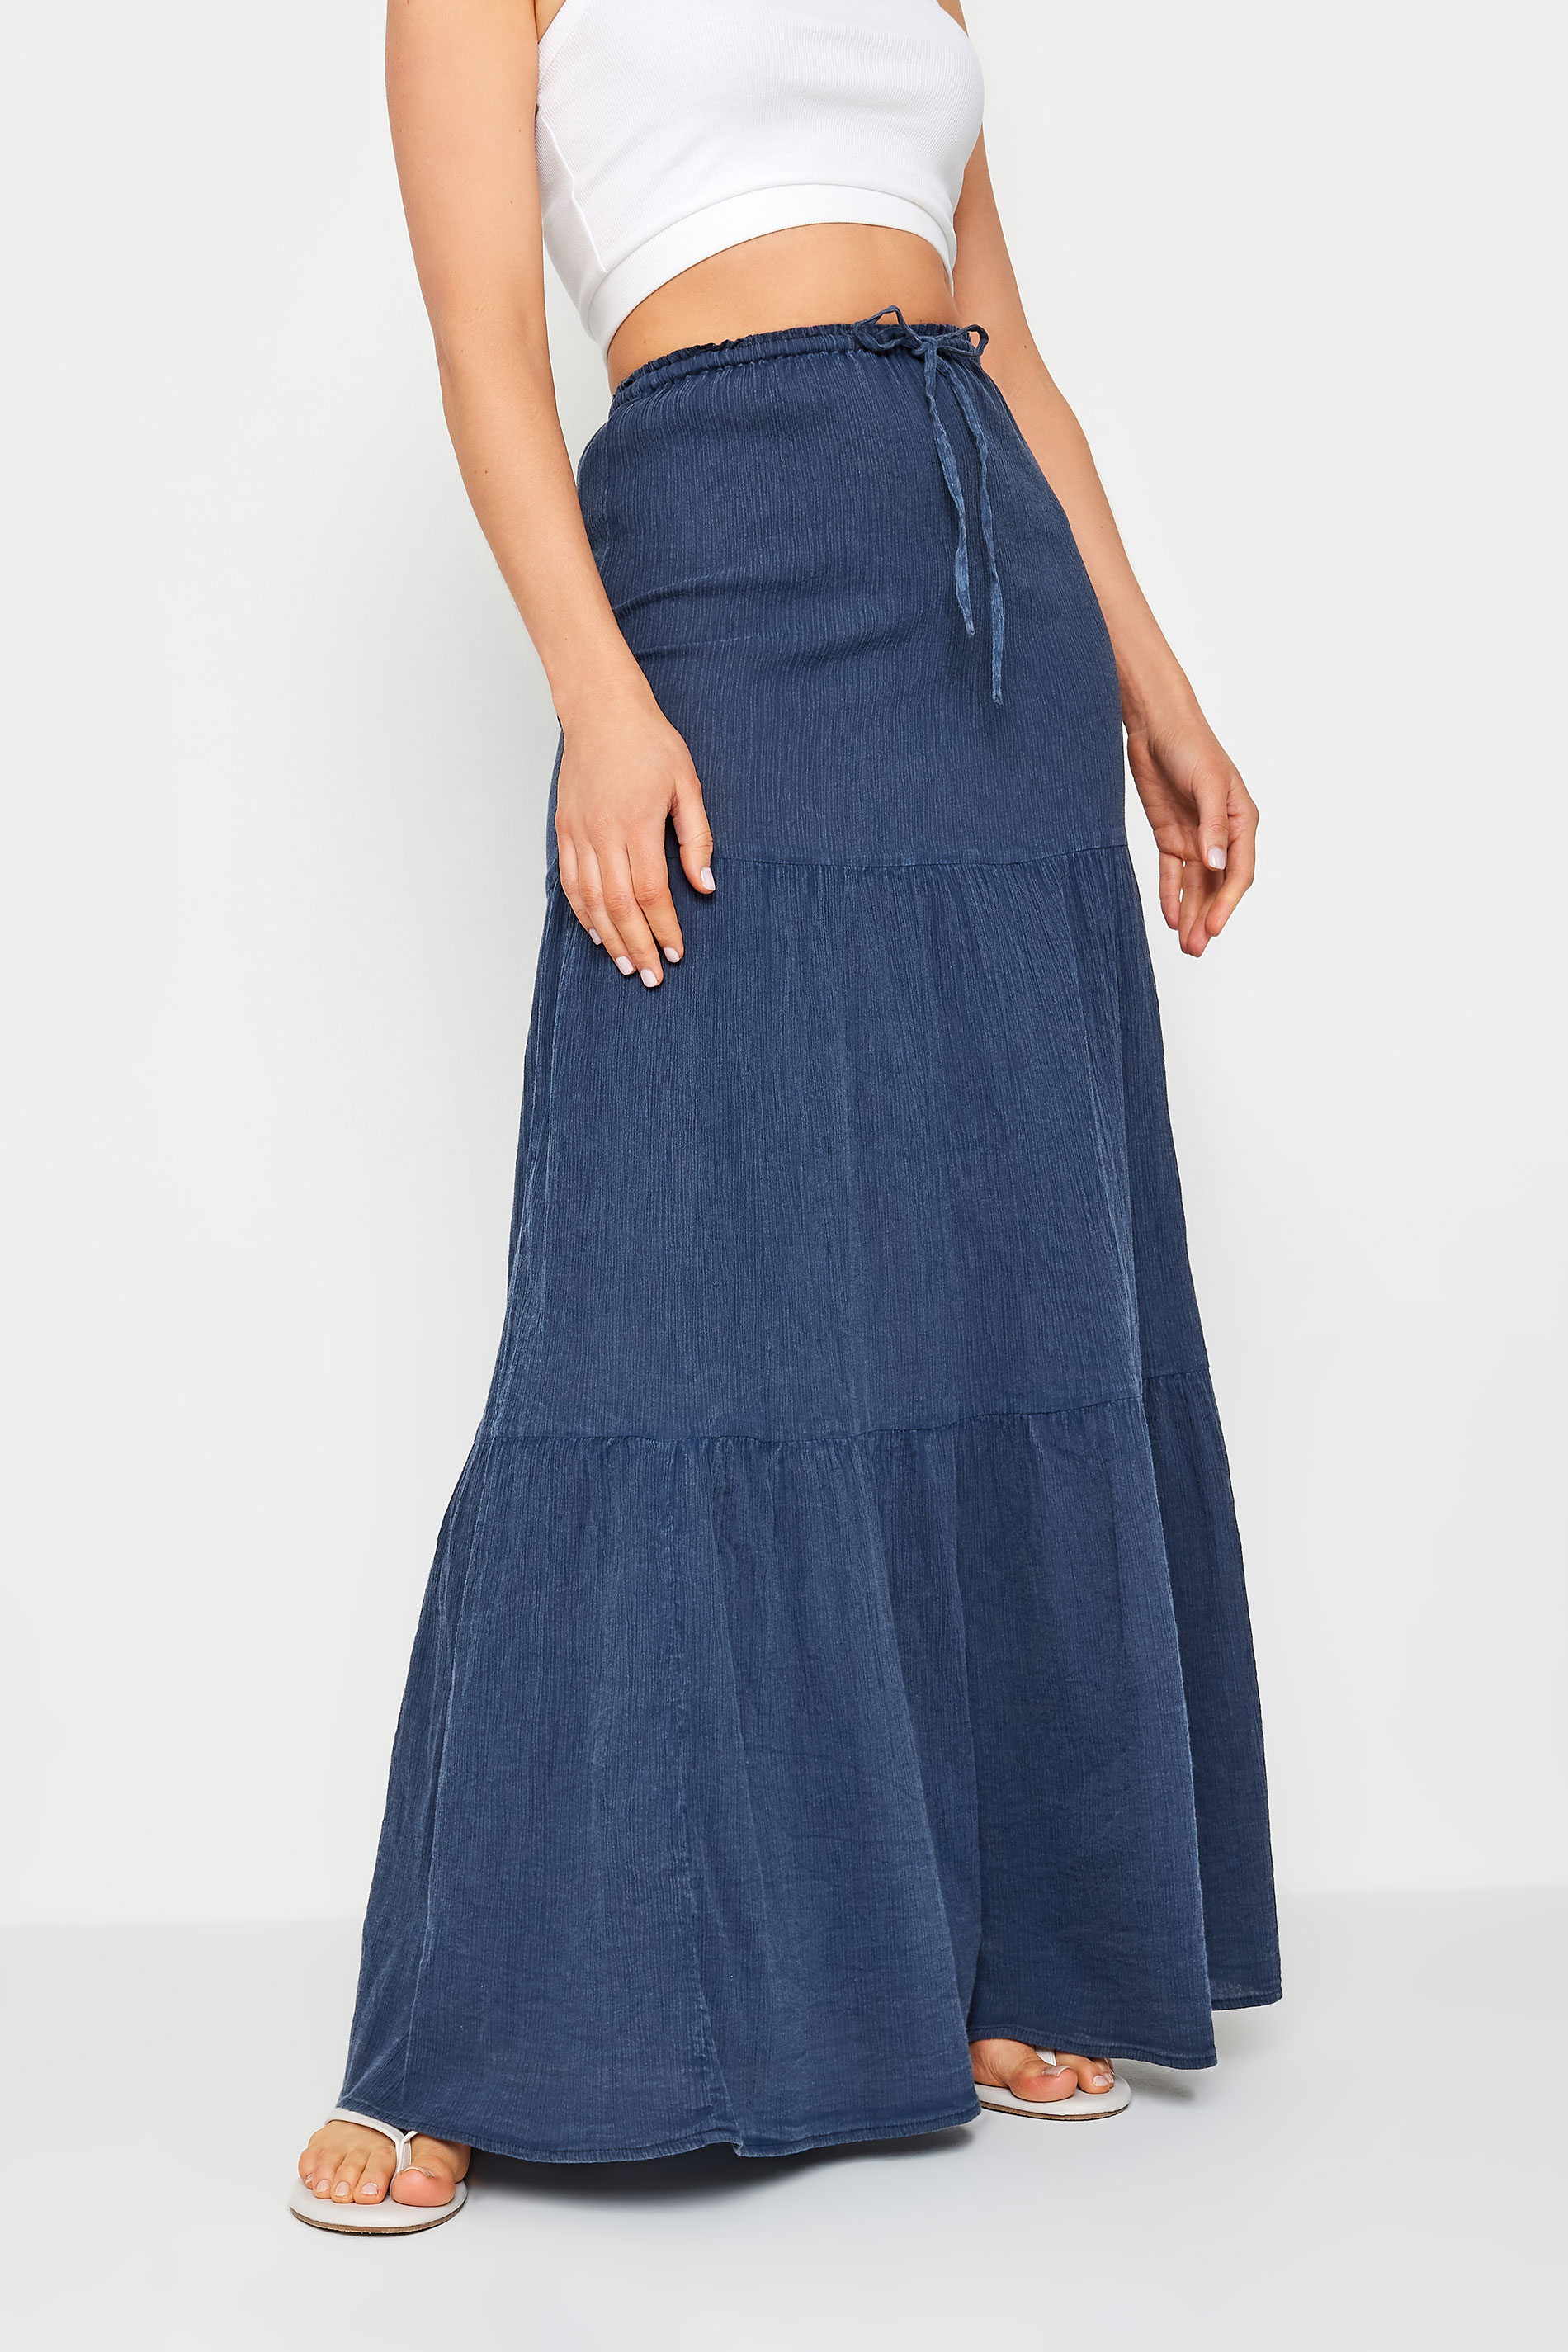 LTS Tall Women's Navy Blue Acid Wash Tiered Maxi Skirt | Long Tall Sally 2